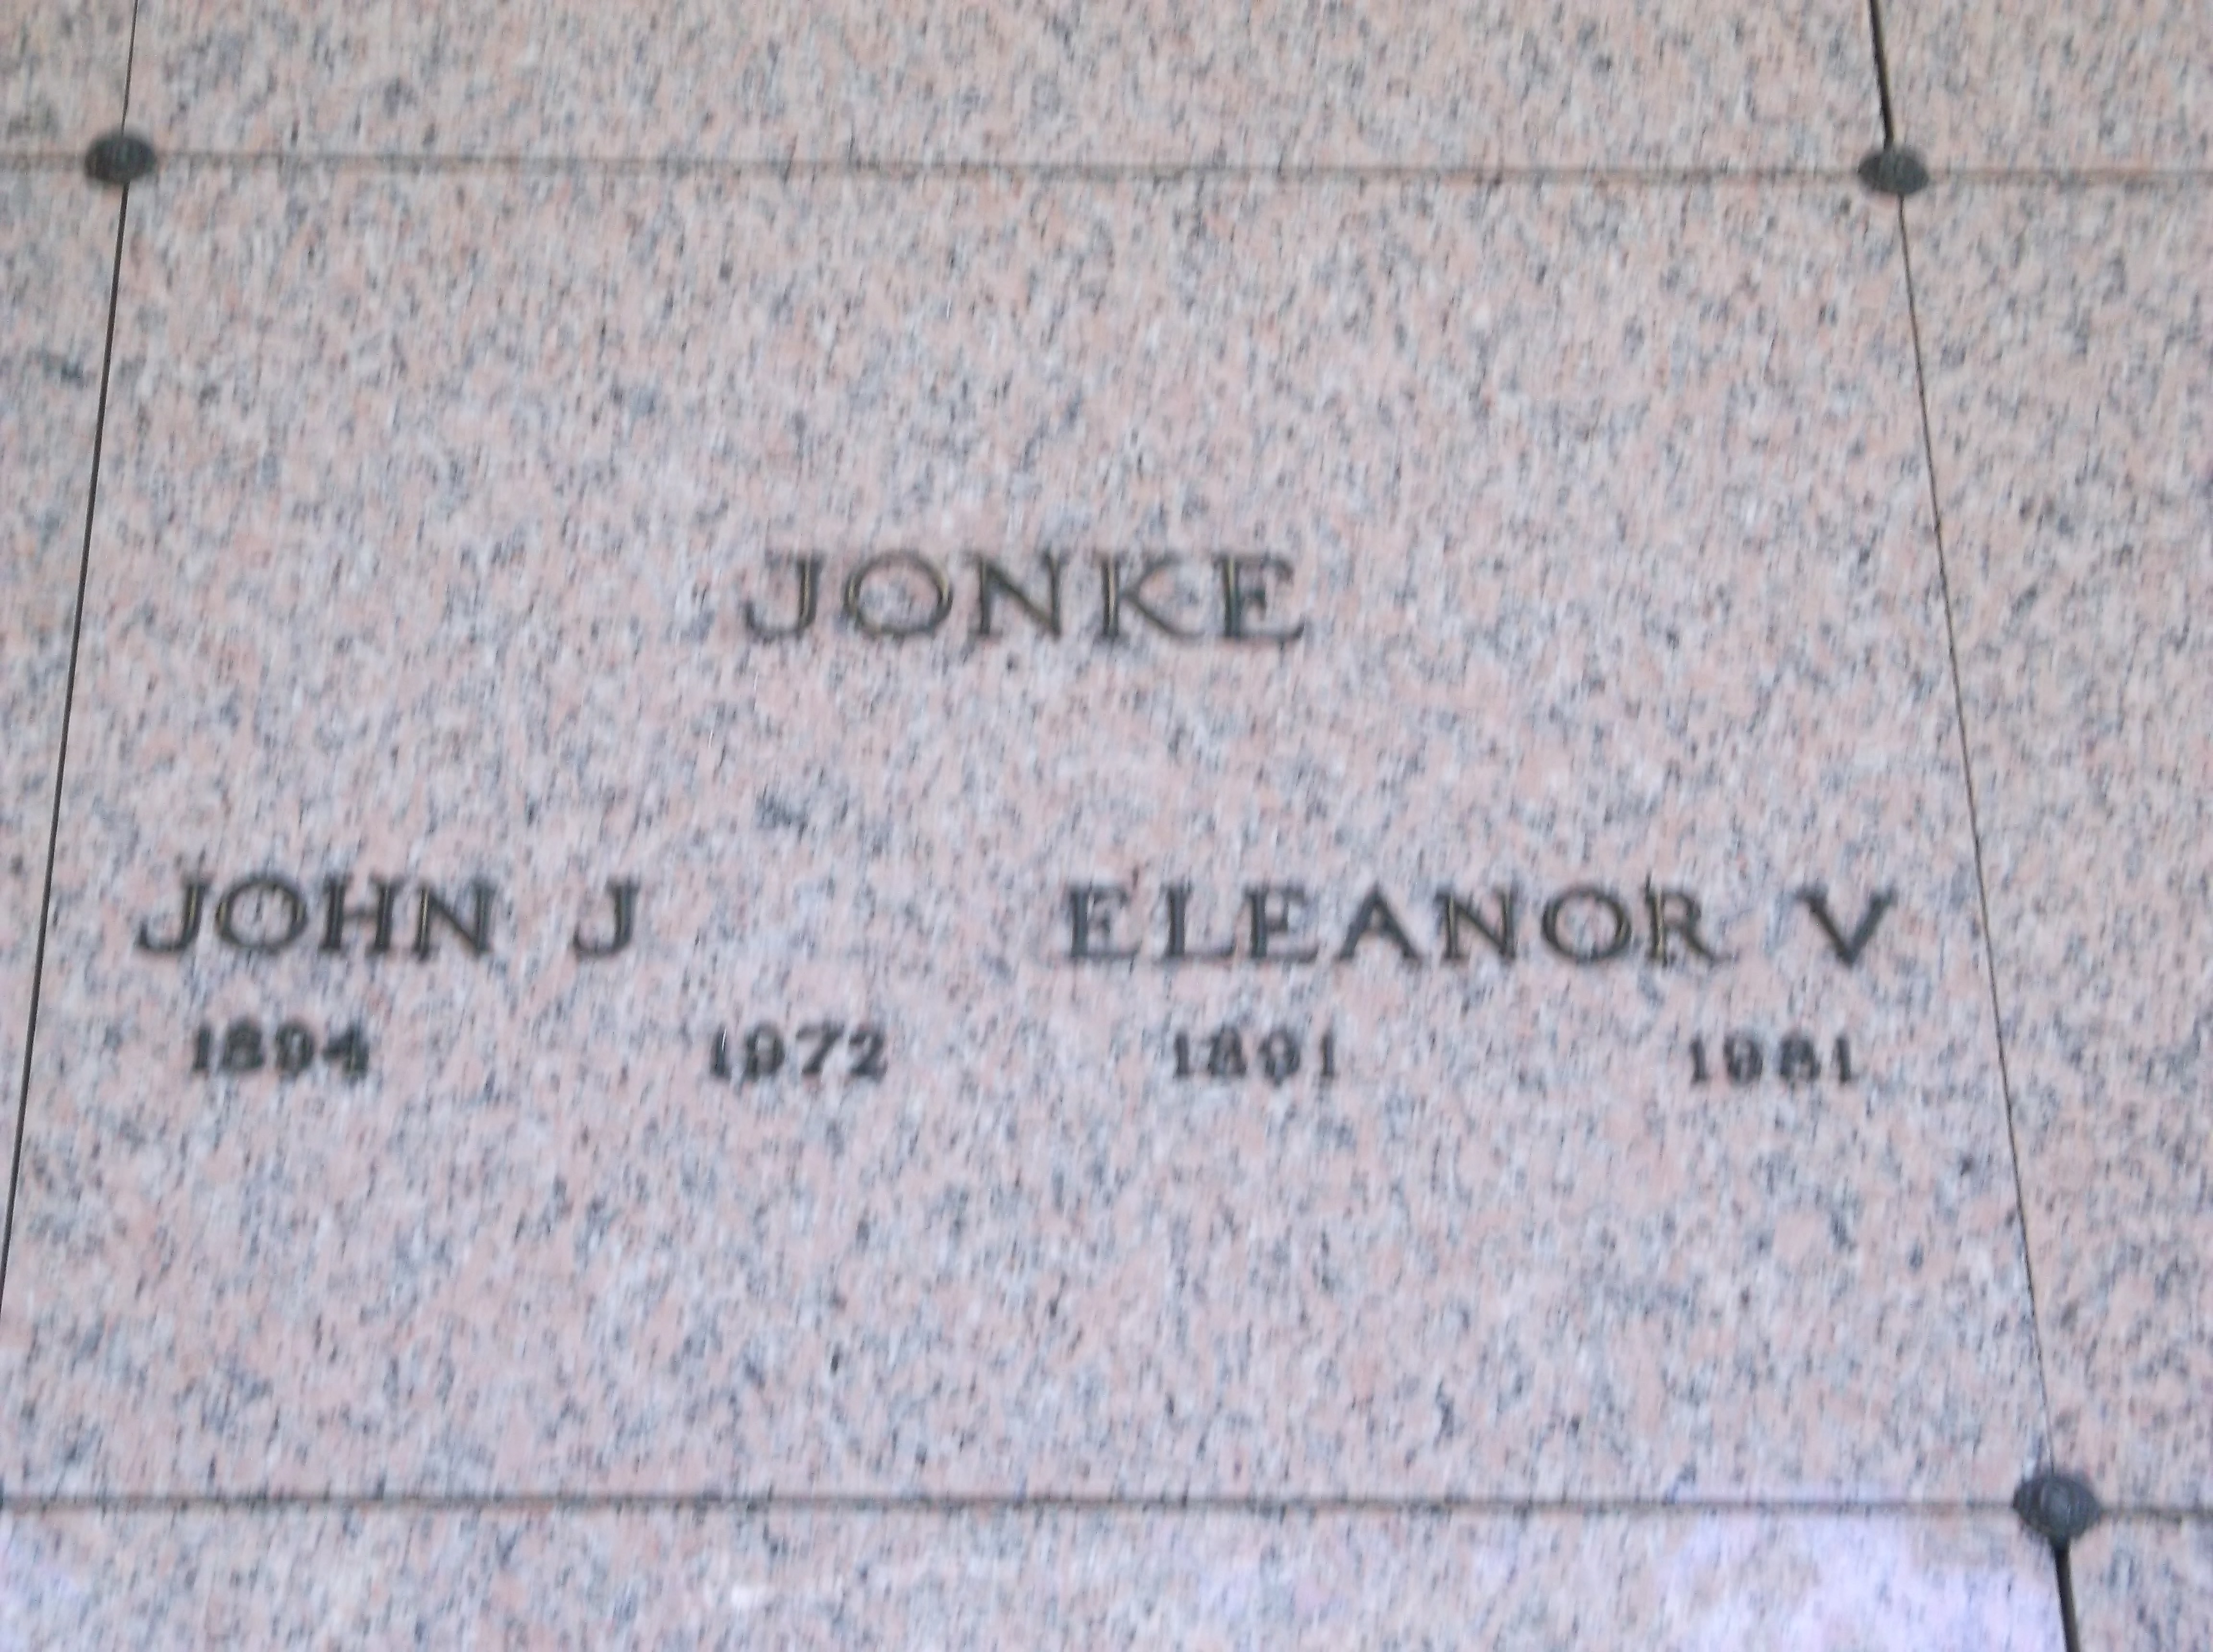 John J Jonke